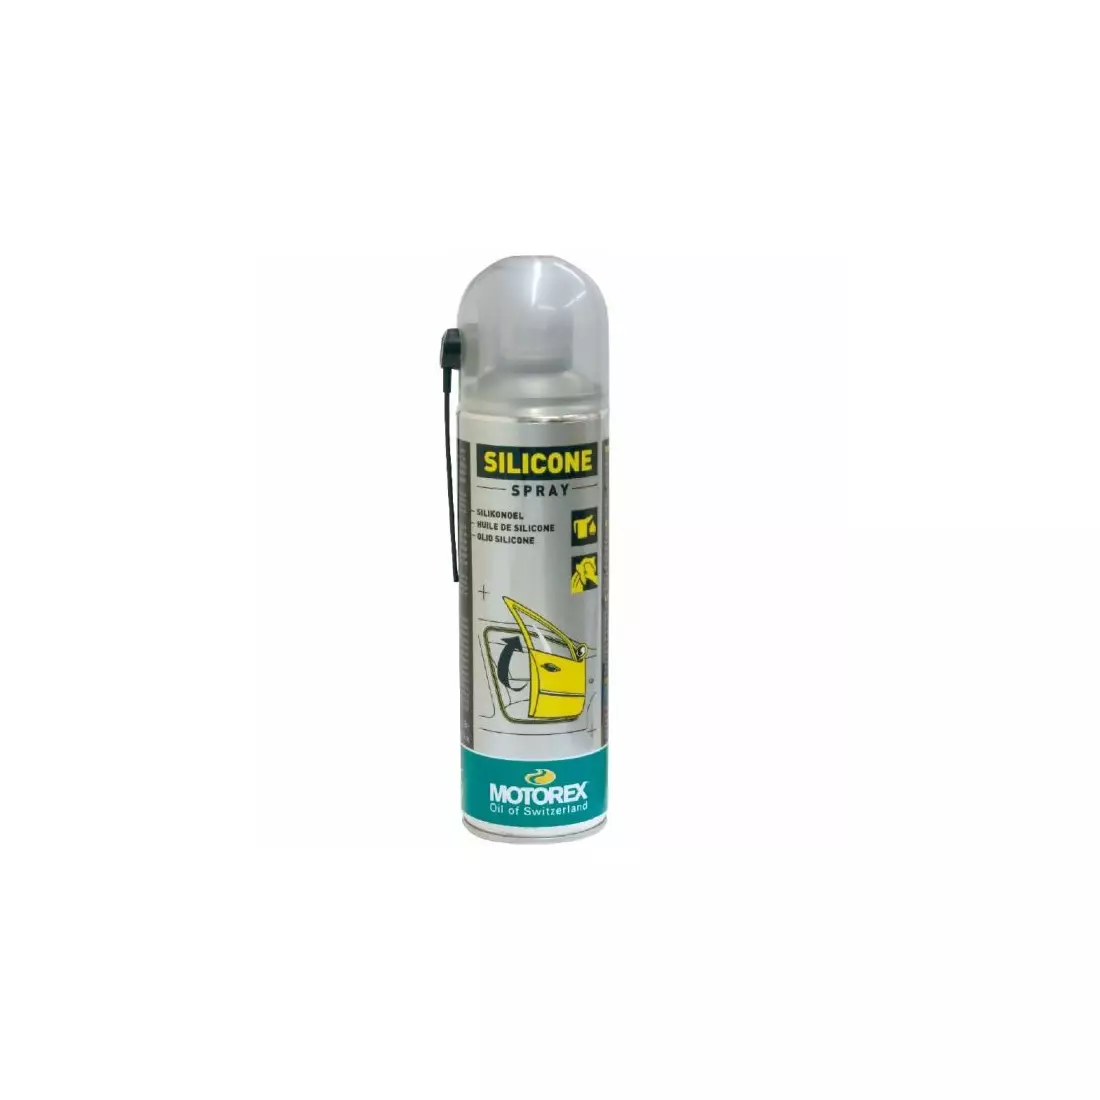 MOTOREX silicone spray SILICON 500ml 302340